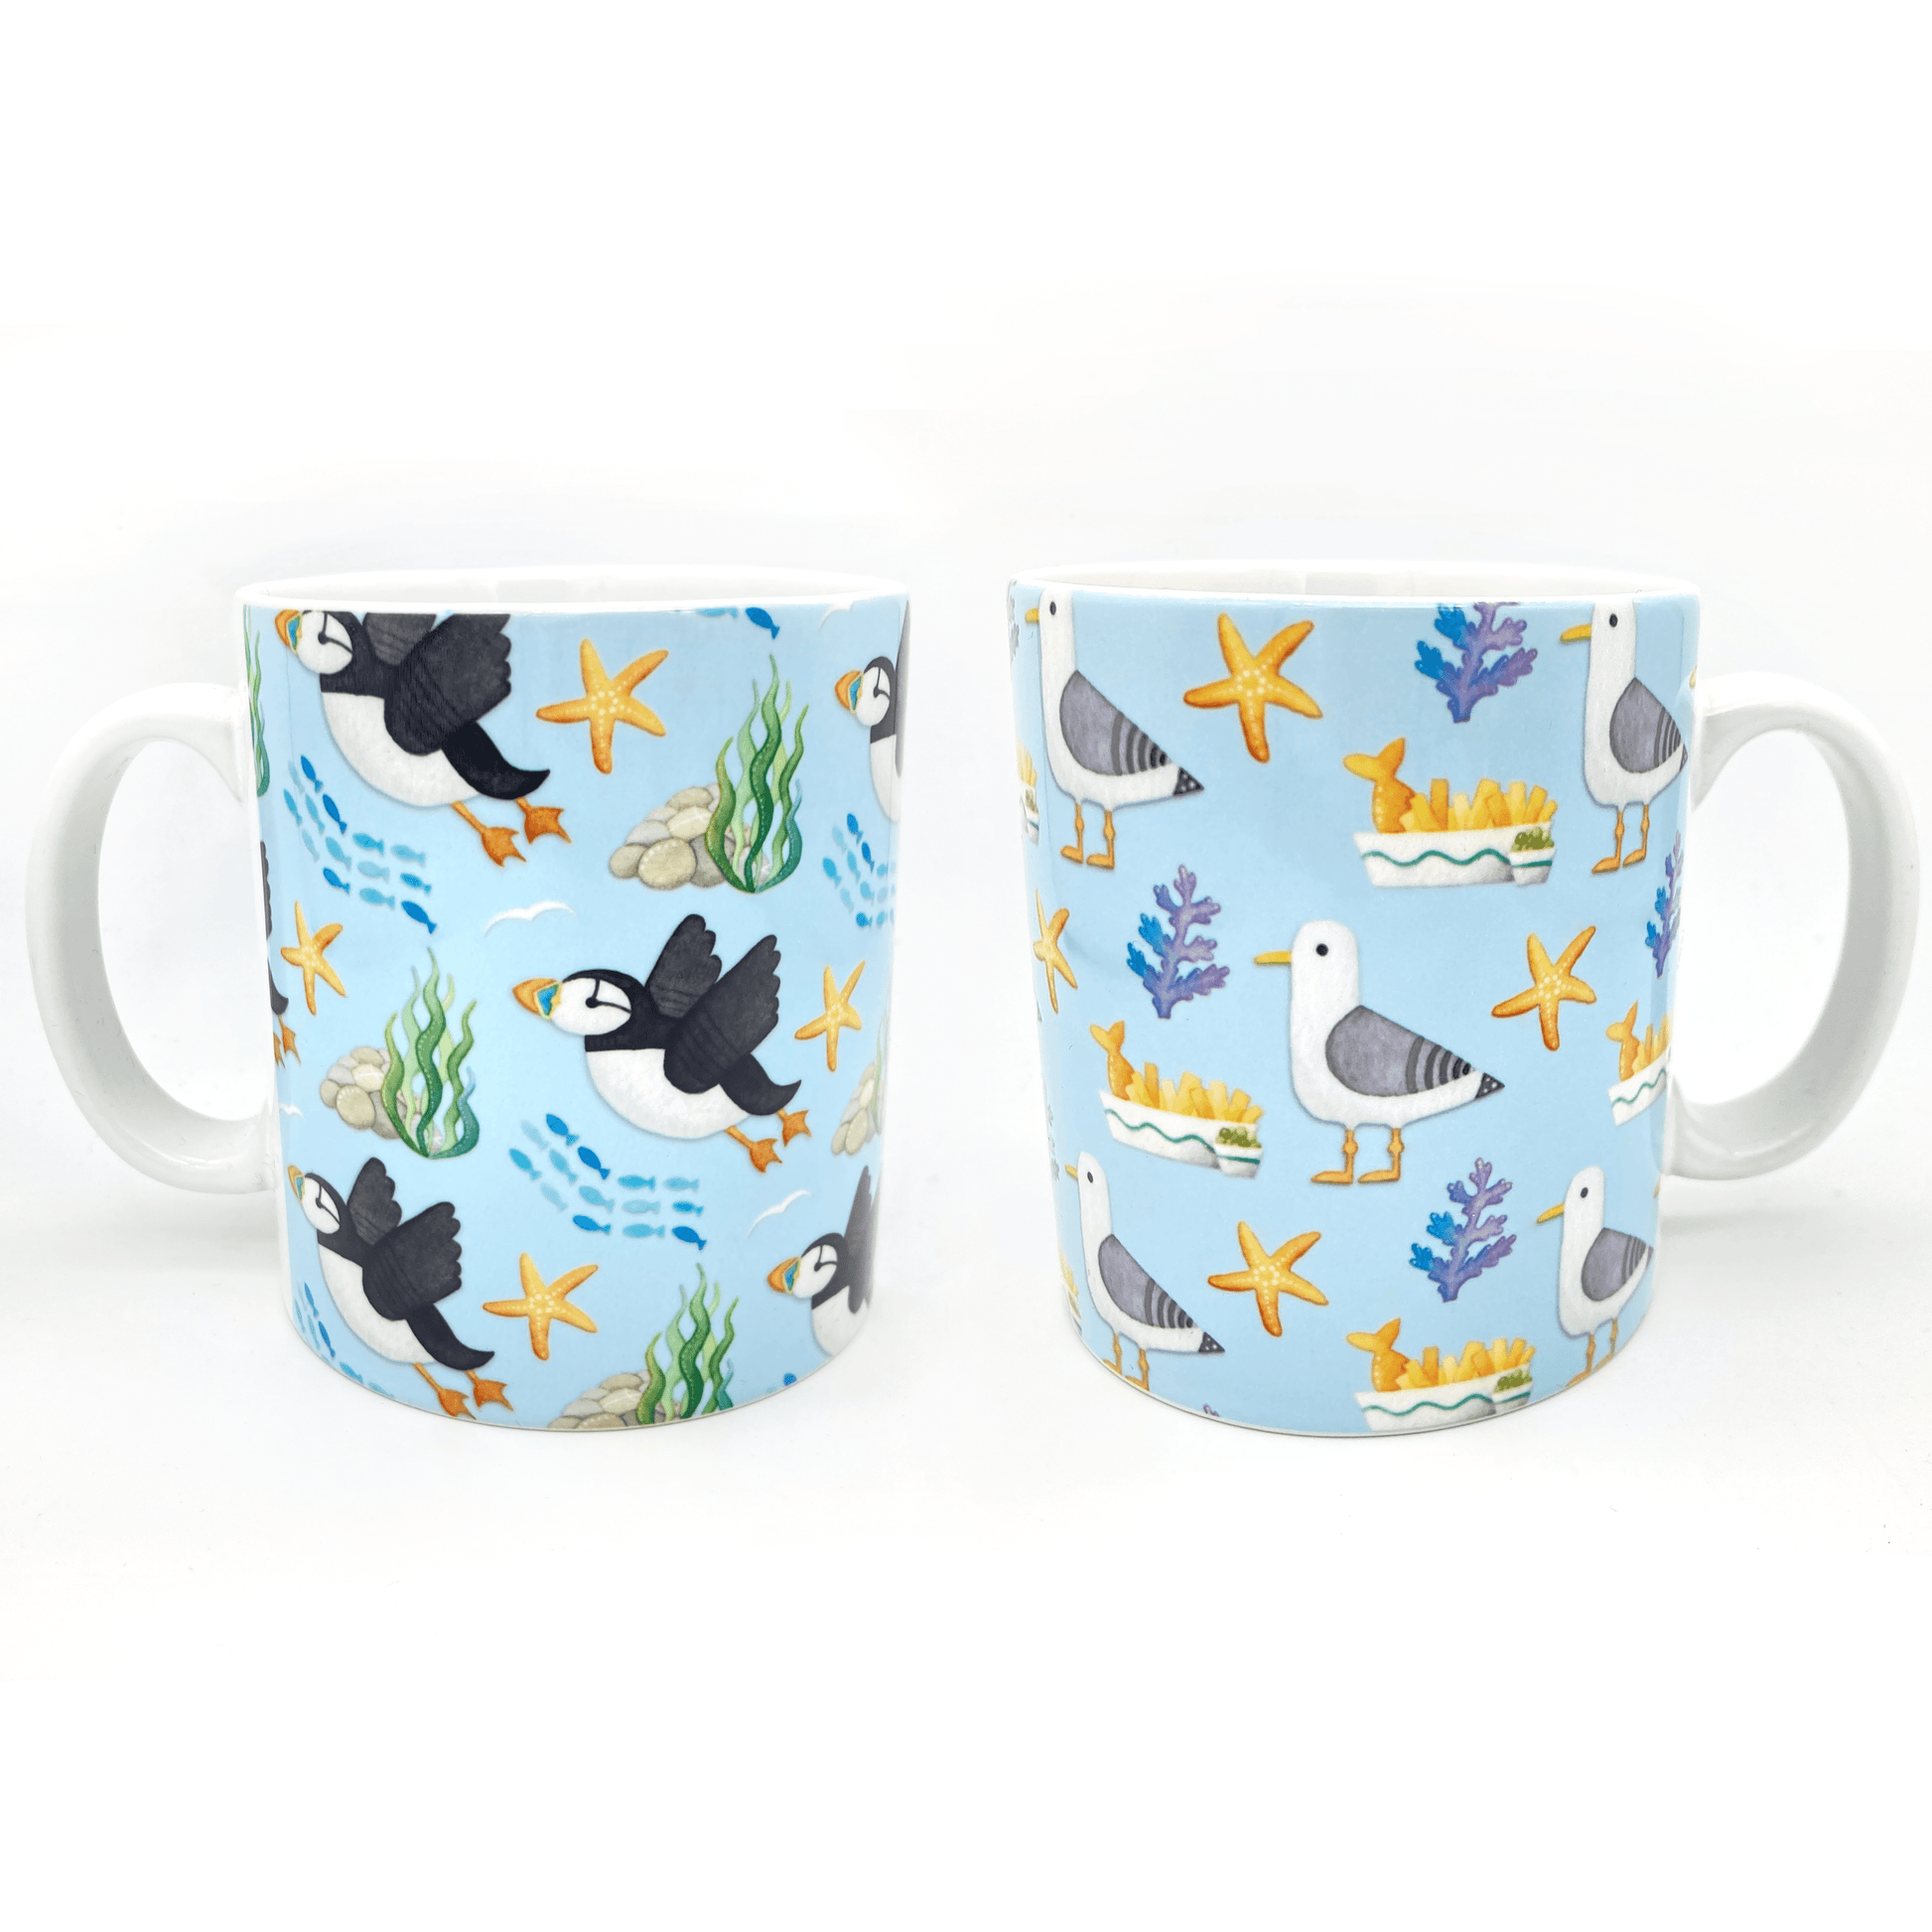 Set of 2 Mugs - Cute Seagull & Puffin Patterns - Save £3 - East Neuk Beach Crafts